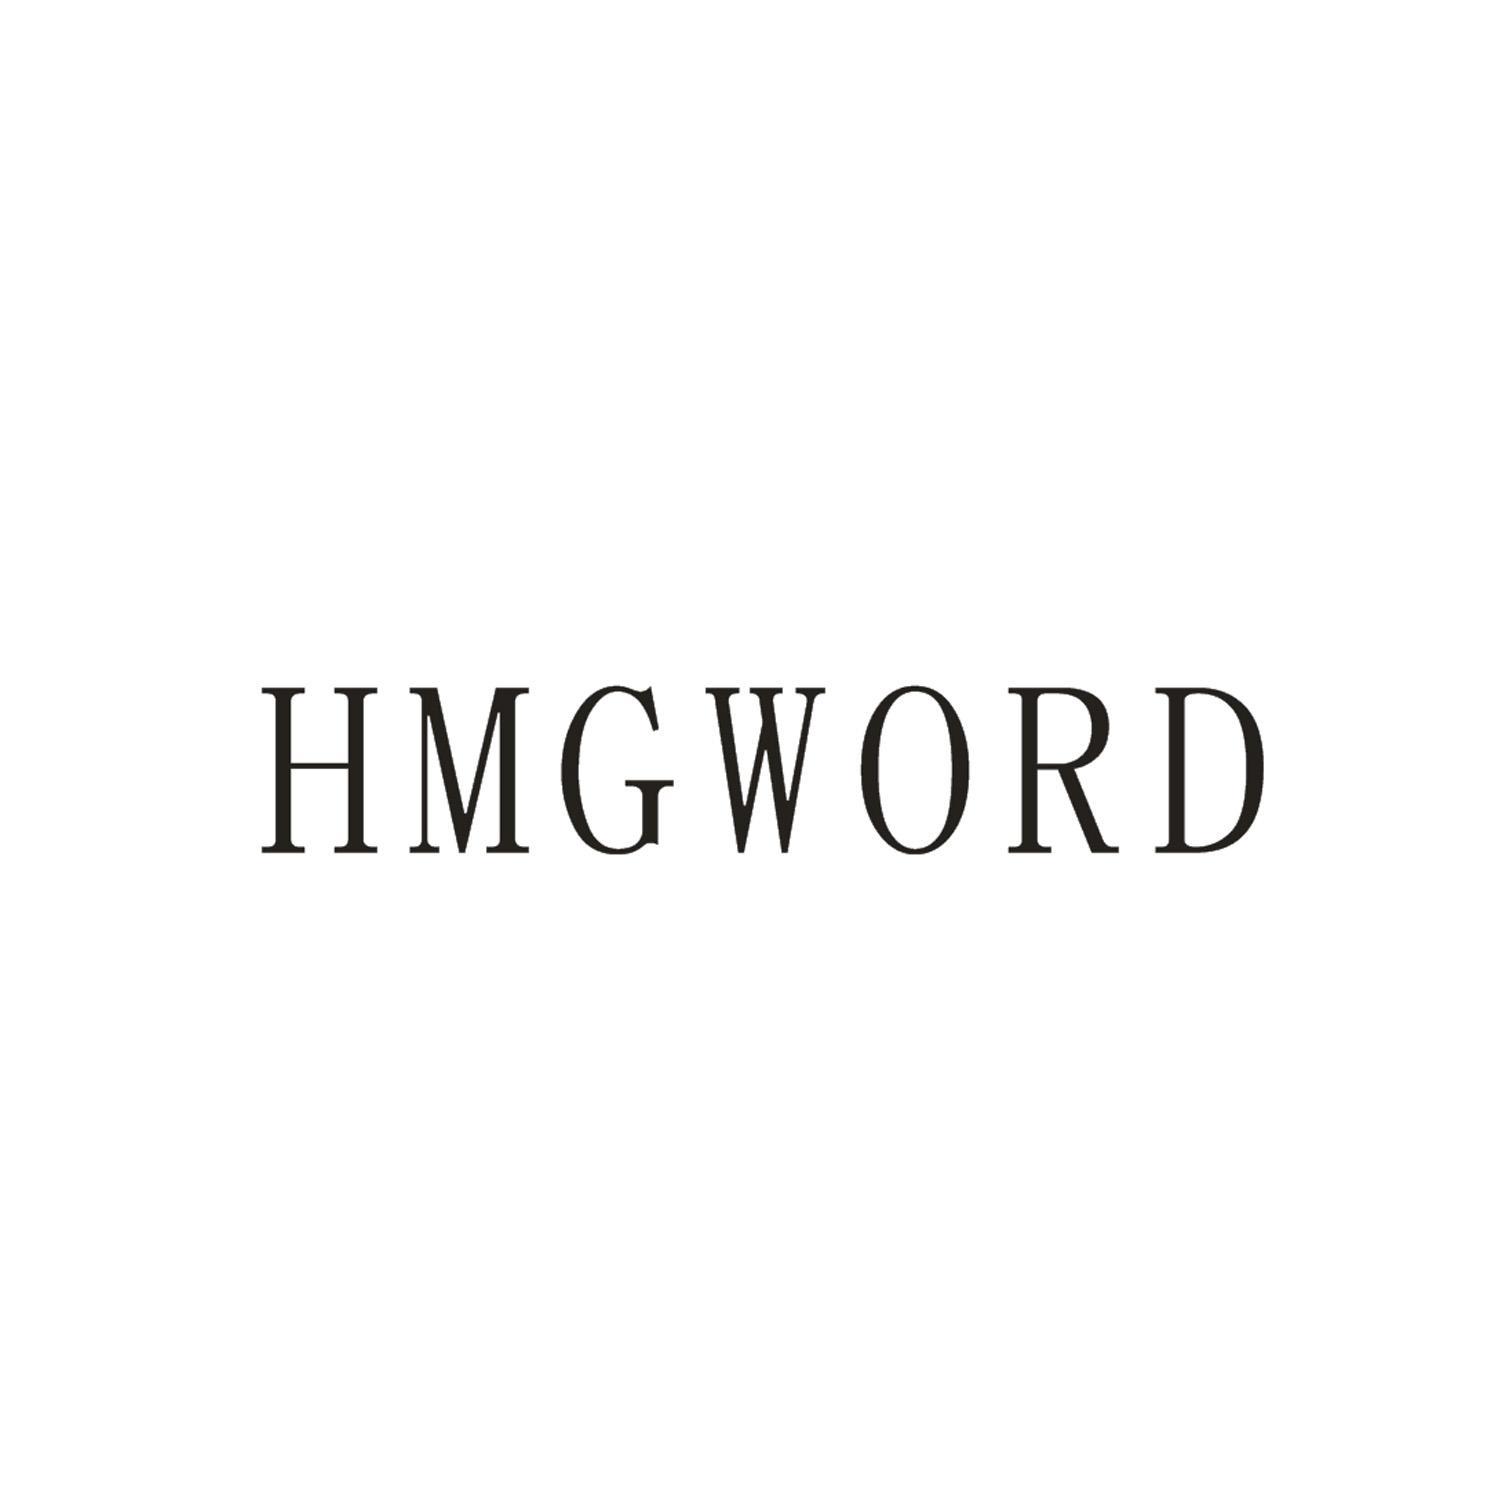 HMGWORD